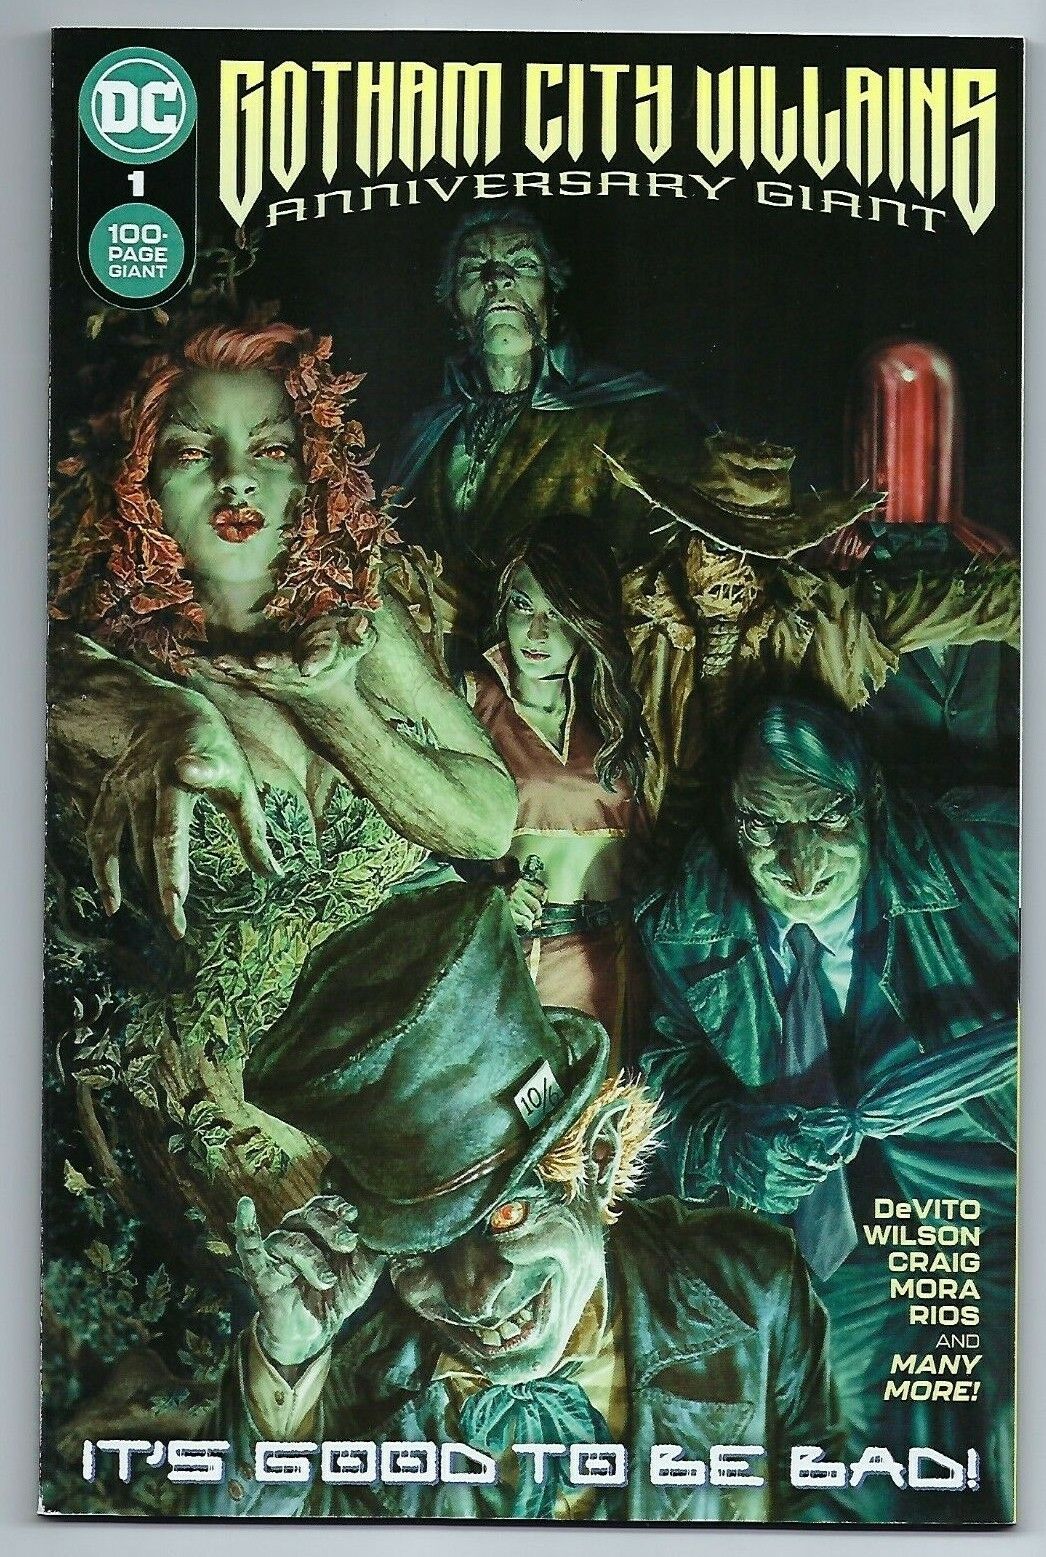 DC Comics GOTHAM CITY VILLAINS ANNIVERSARY GIANT #1 first printing cover A